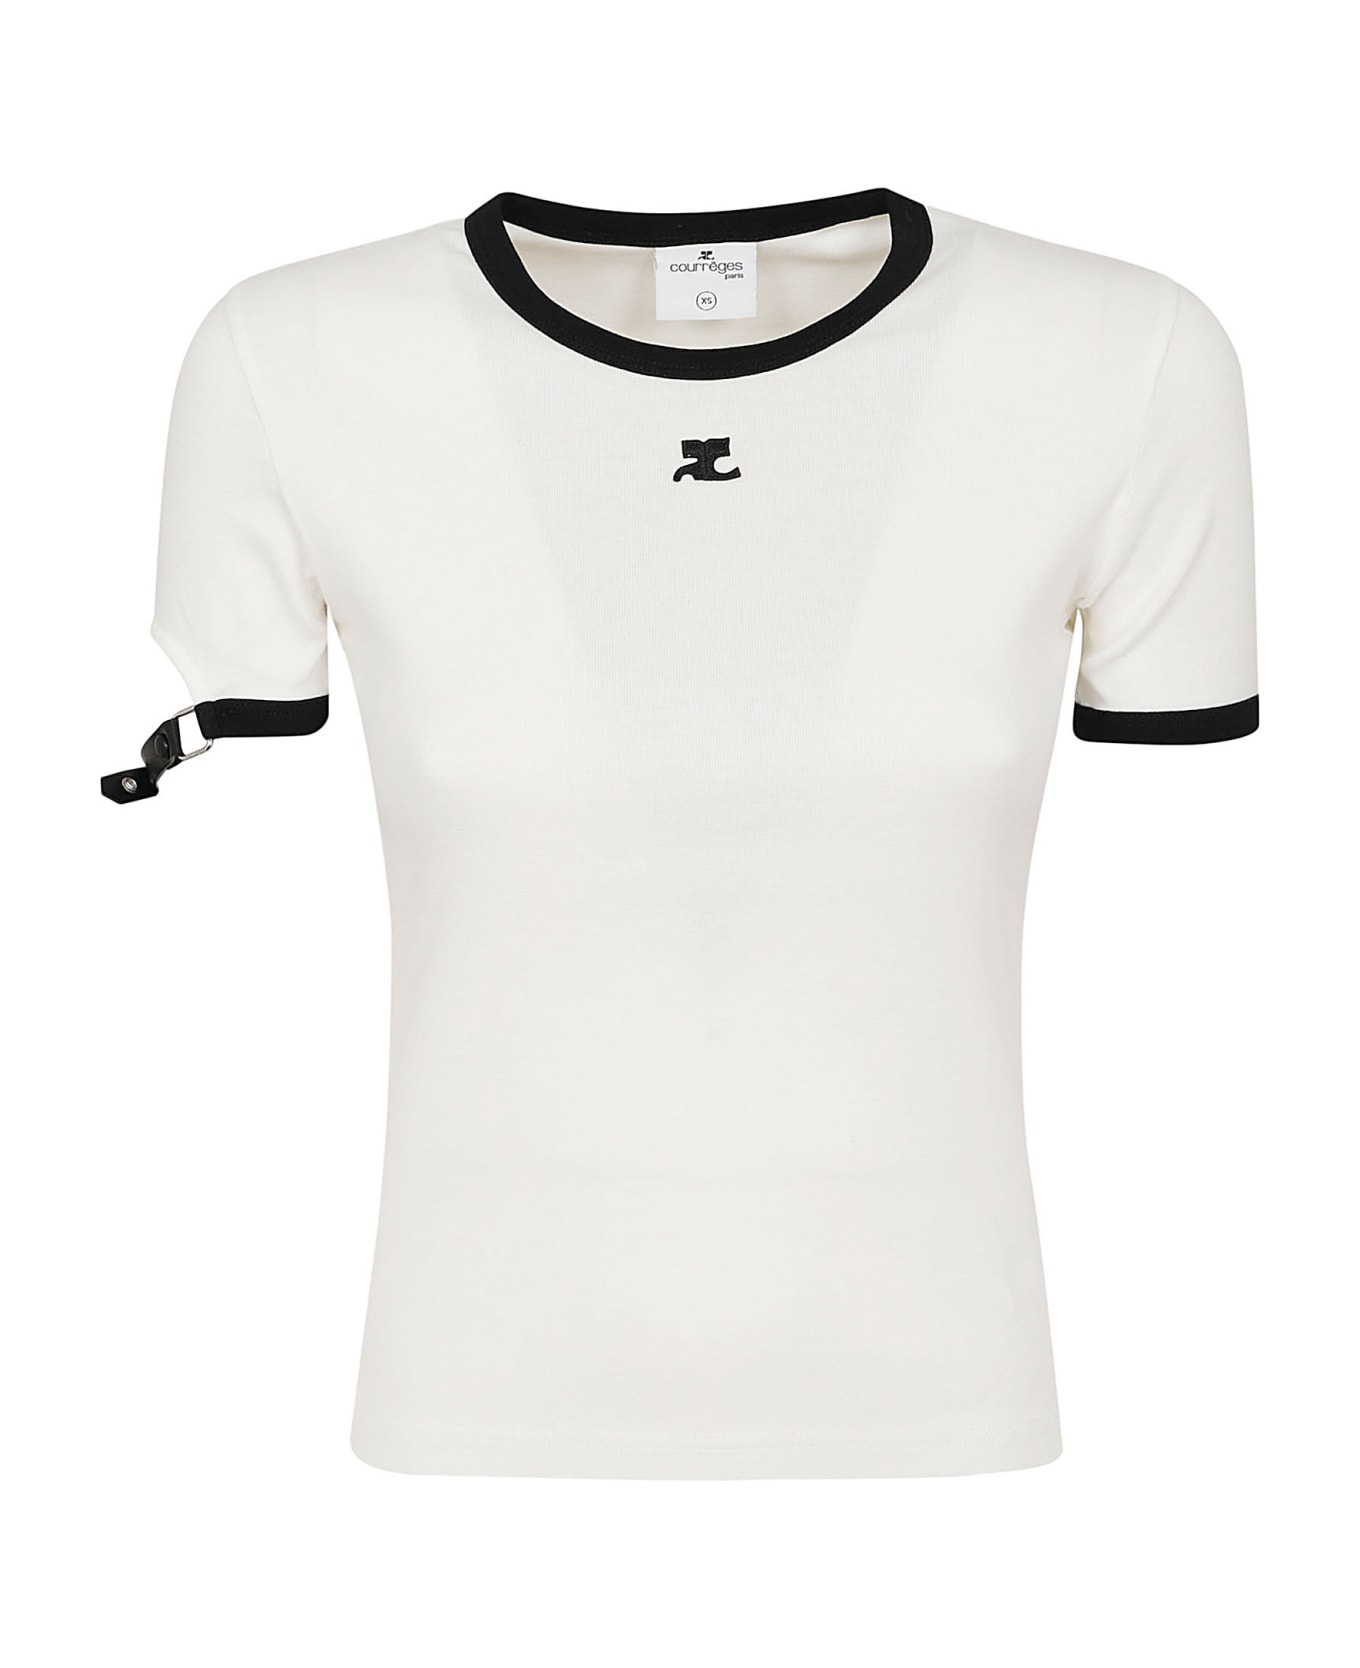 Courrèges Buckle Contrast T-shirt - Heritage White Black